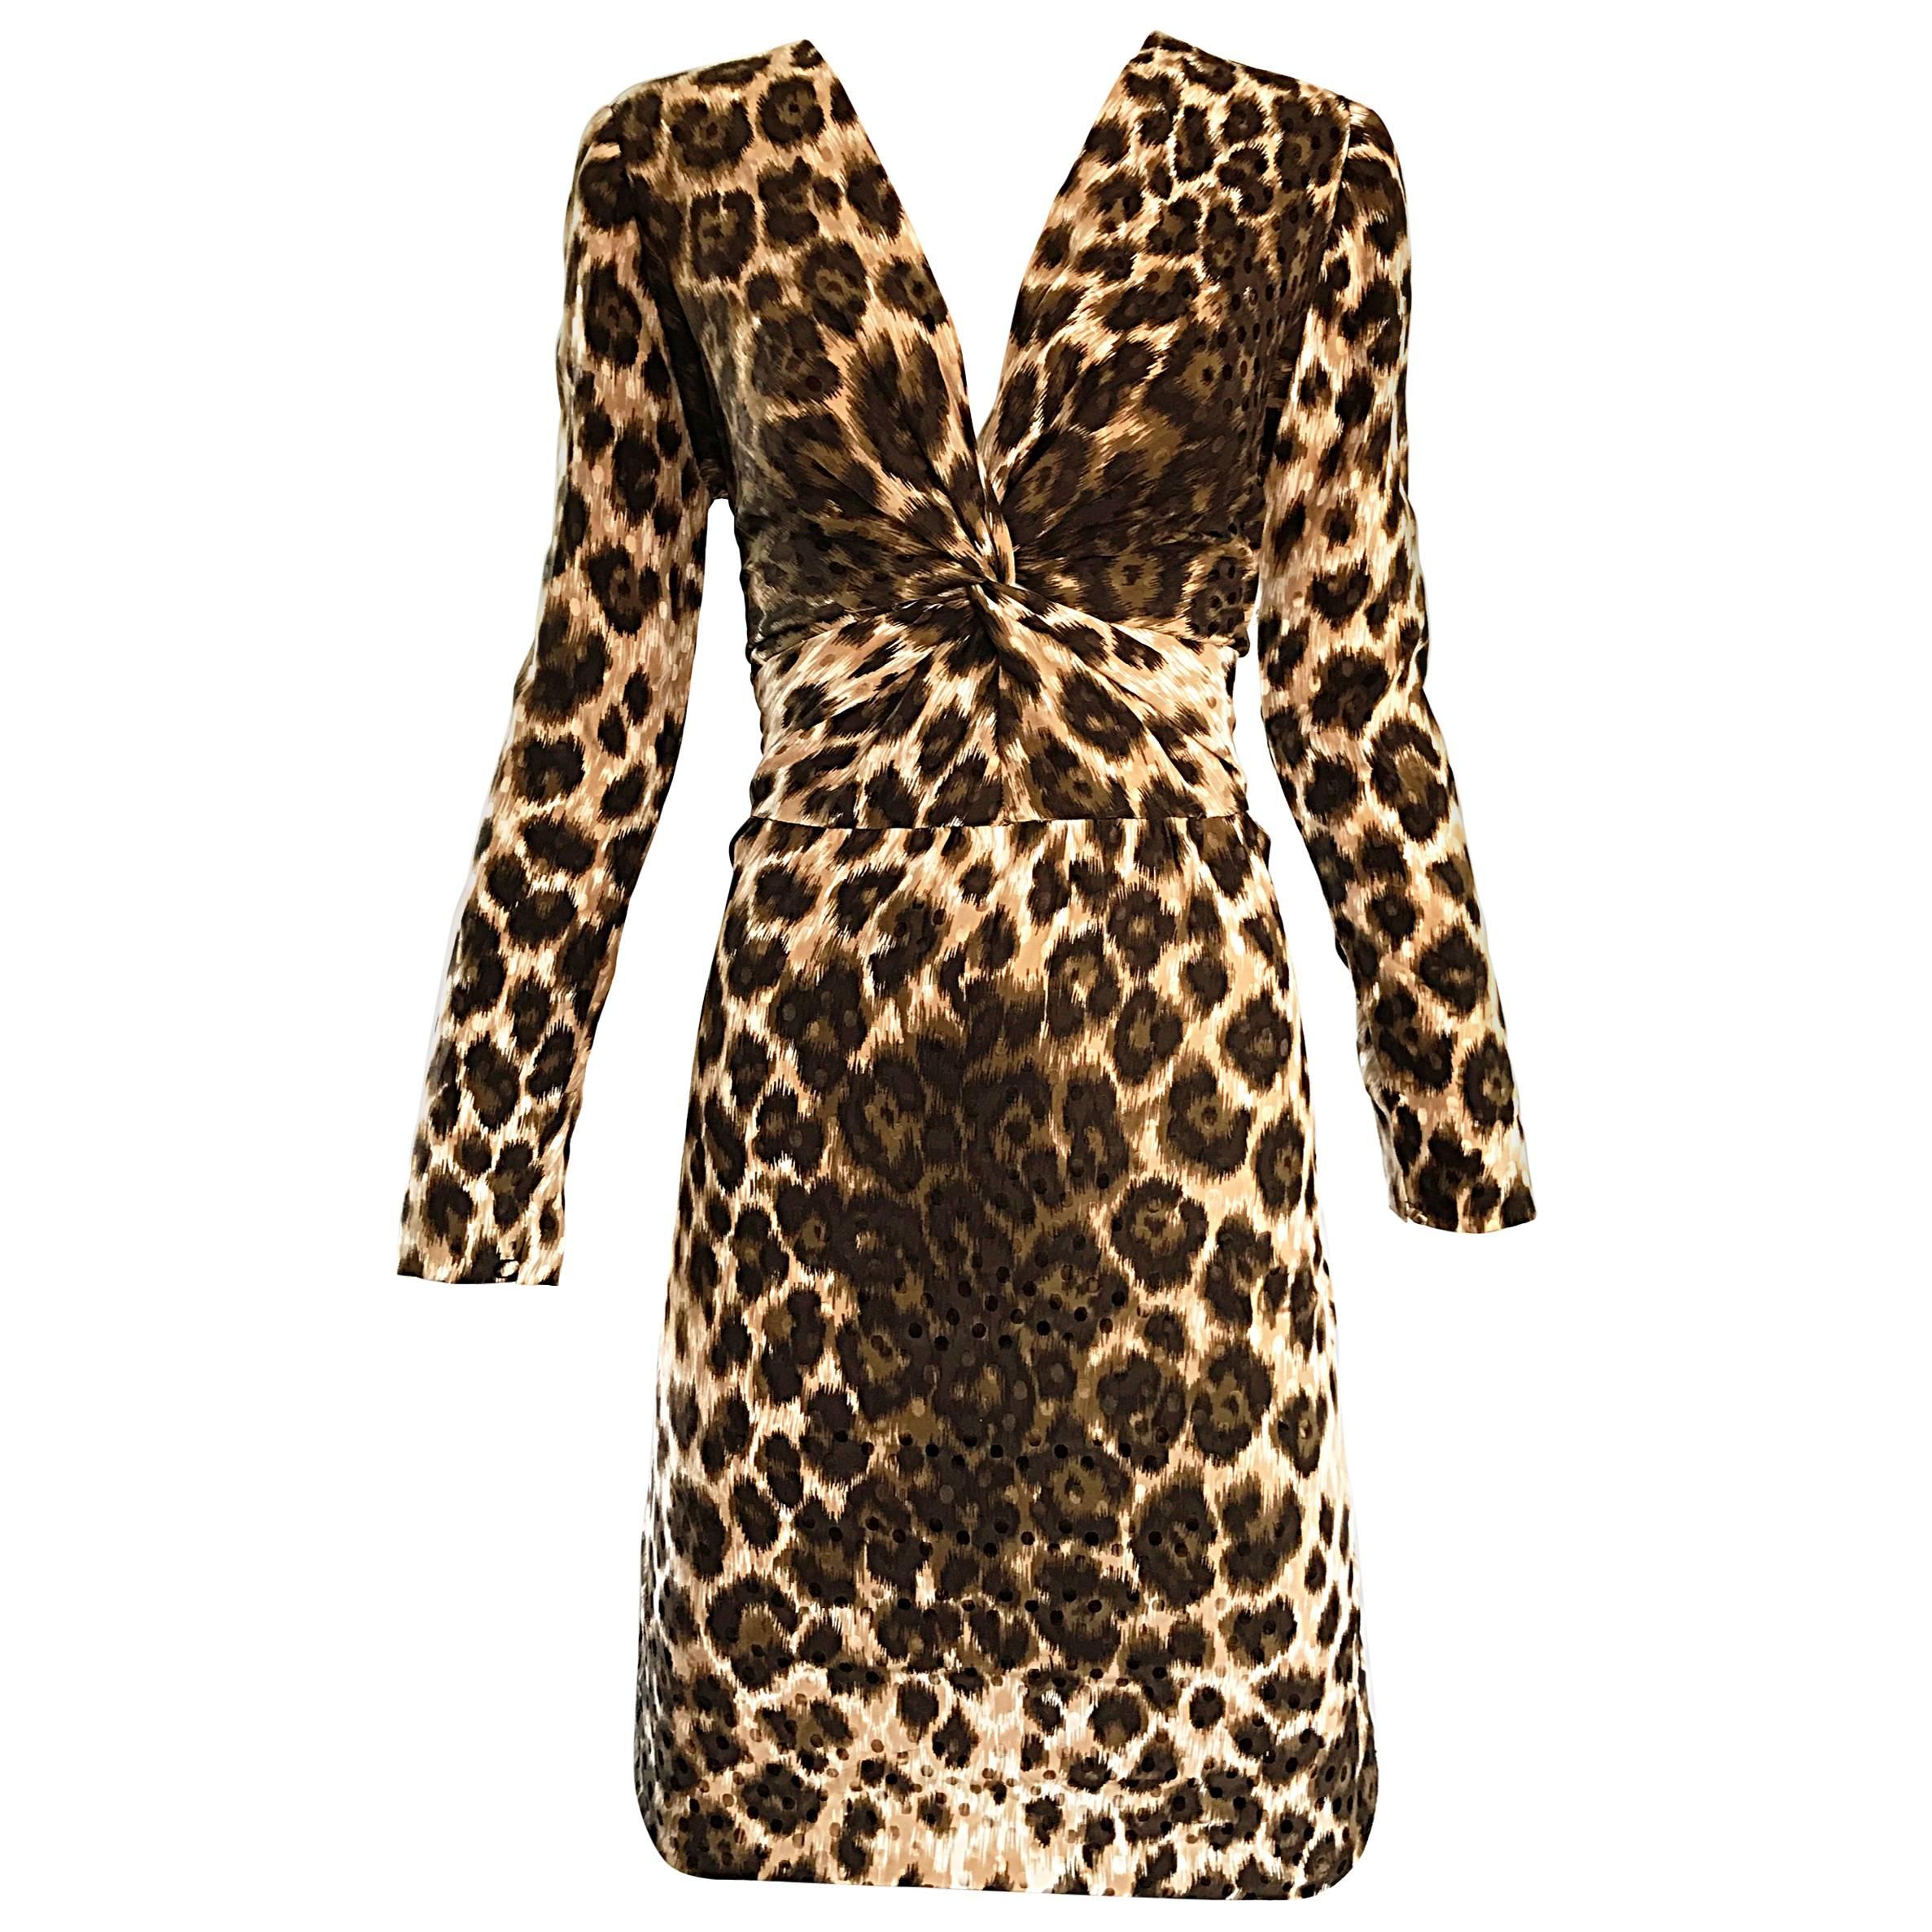 Givenchy by Alexander McQueen Vintage 1990s Leopard Cheetah Print Silk 90s Dress